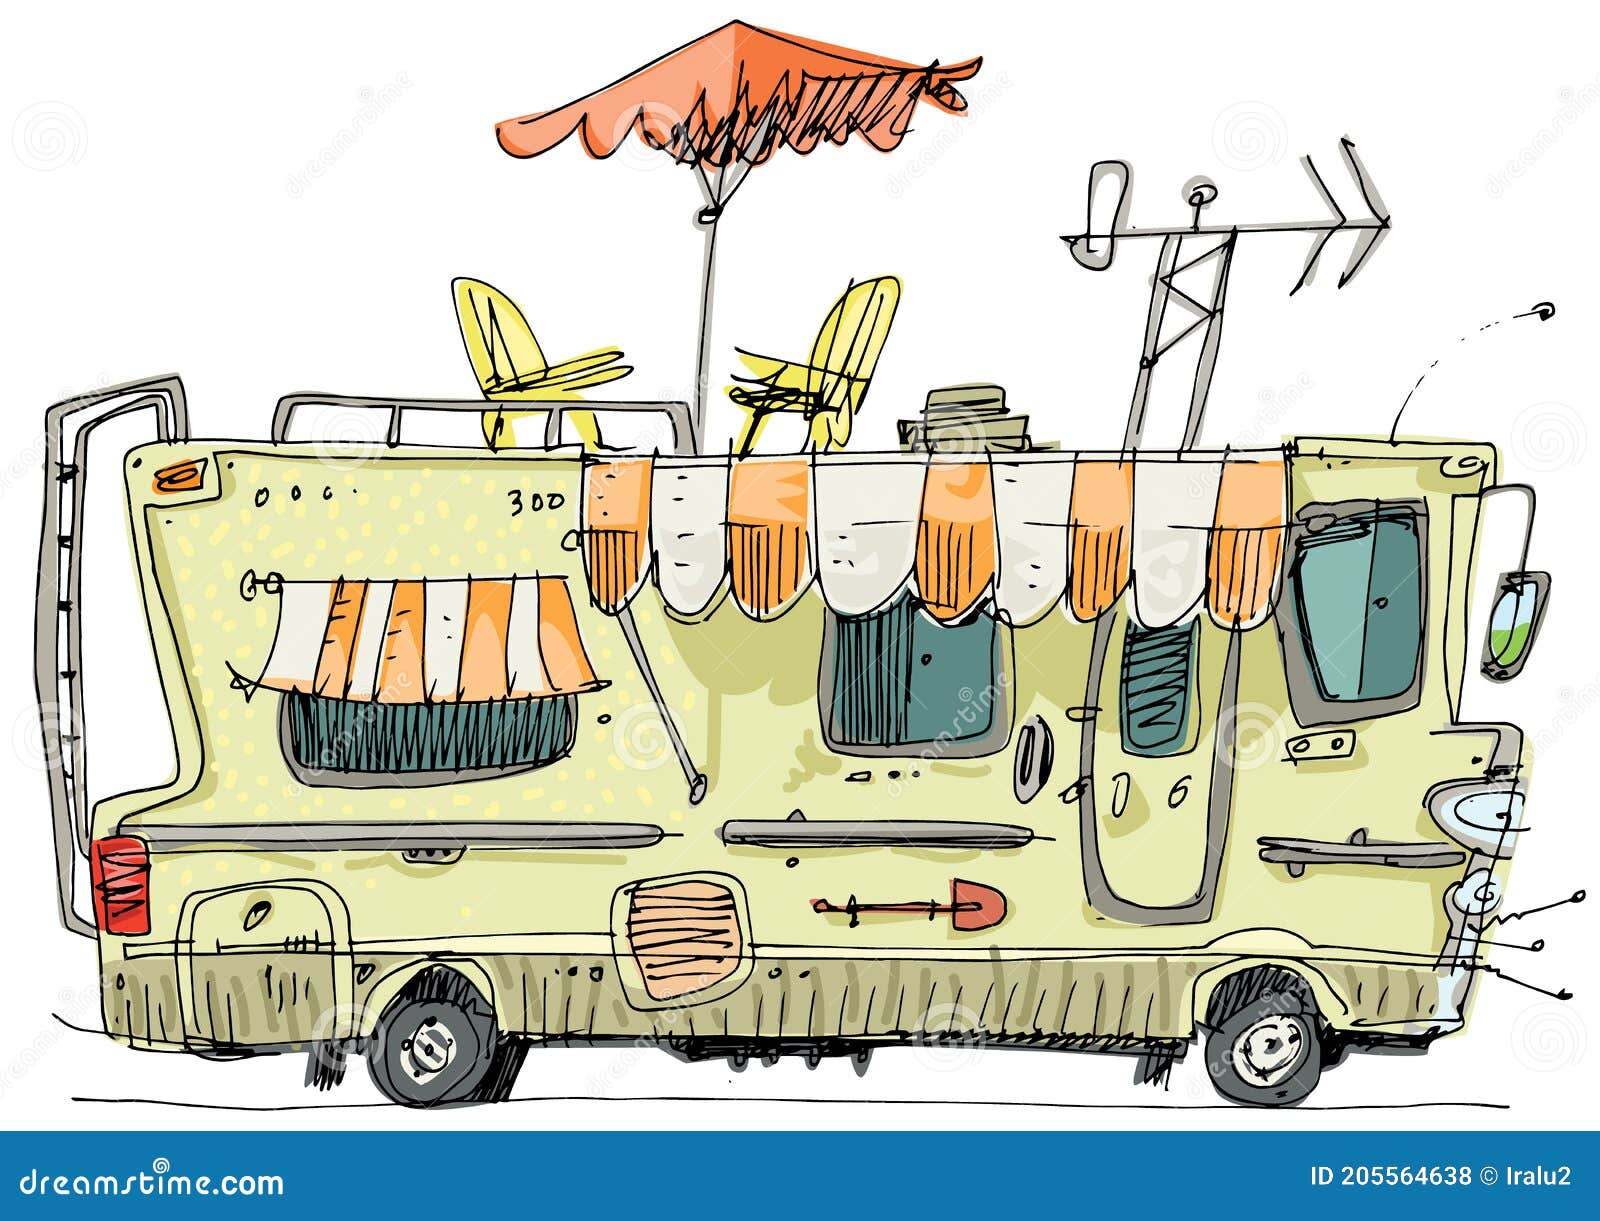 a drawing of camper van